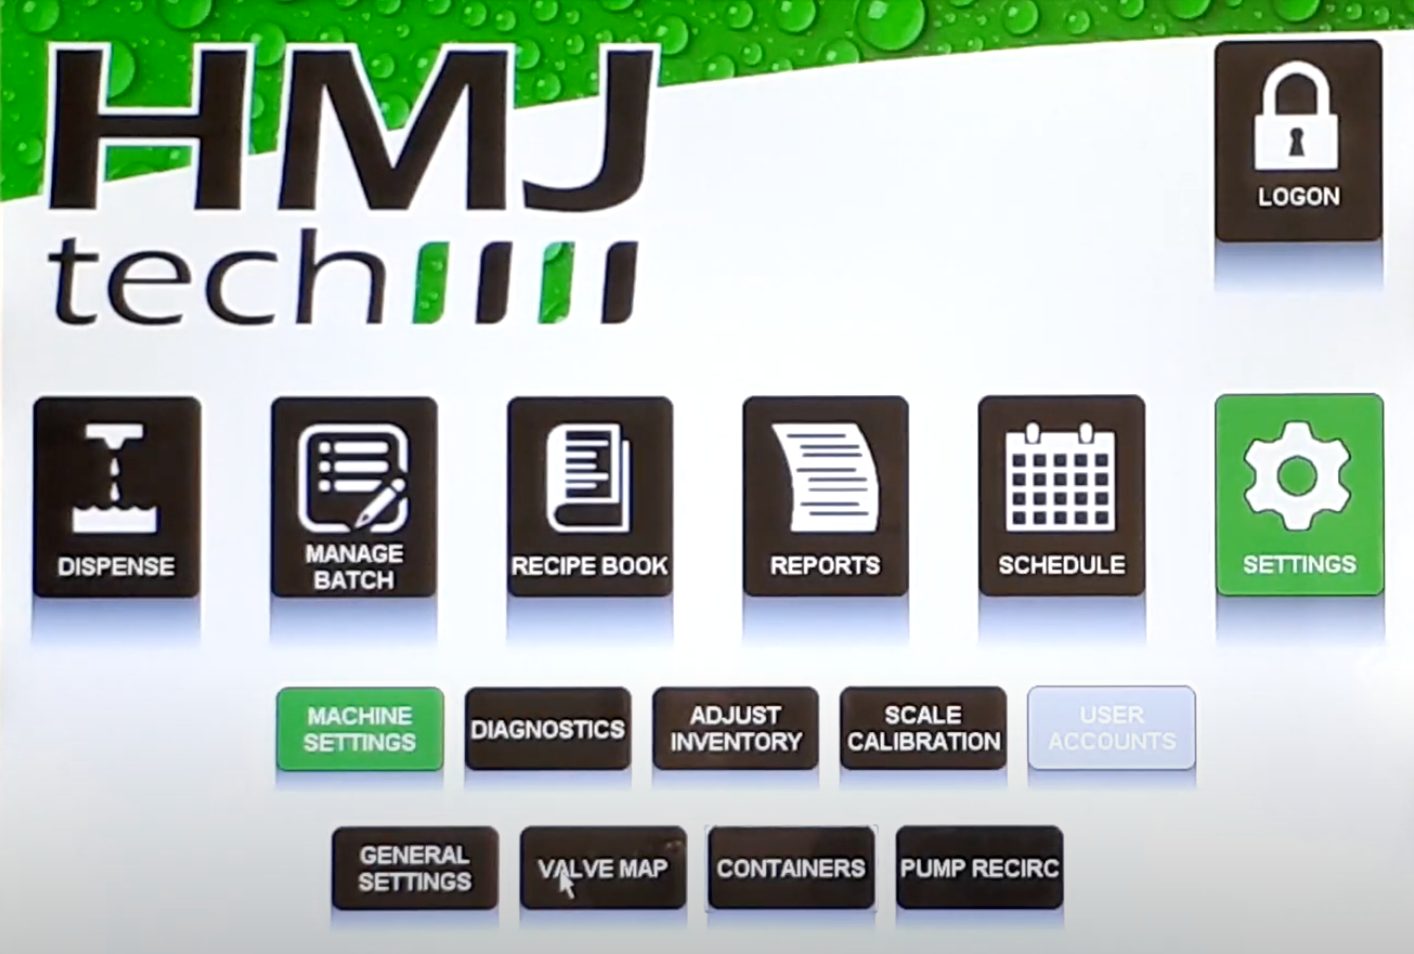 HMJ tech software intuitive interface